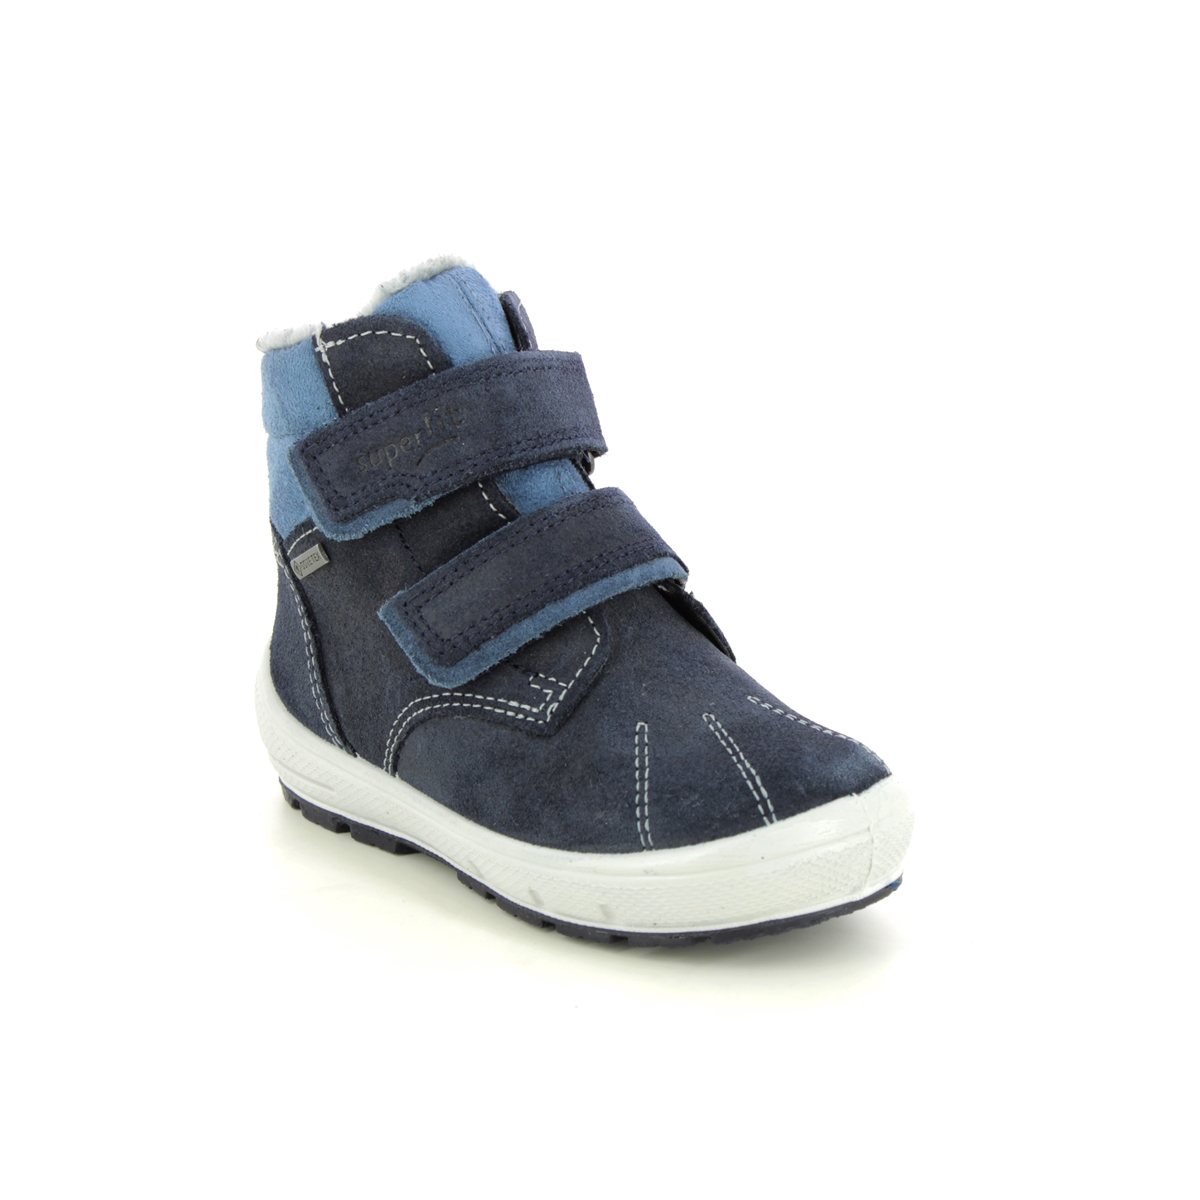 Superfit Groovy Gtx Navy Light Blue Kids Toddler Boys Boots 1006317-8000 In Size 29 In Plain Navy Light Blue